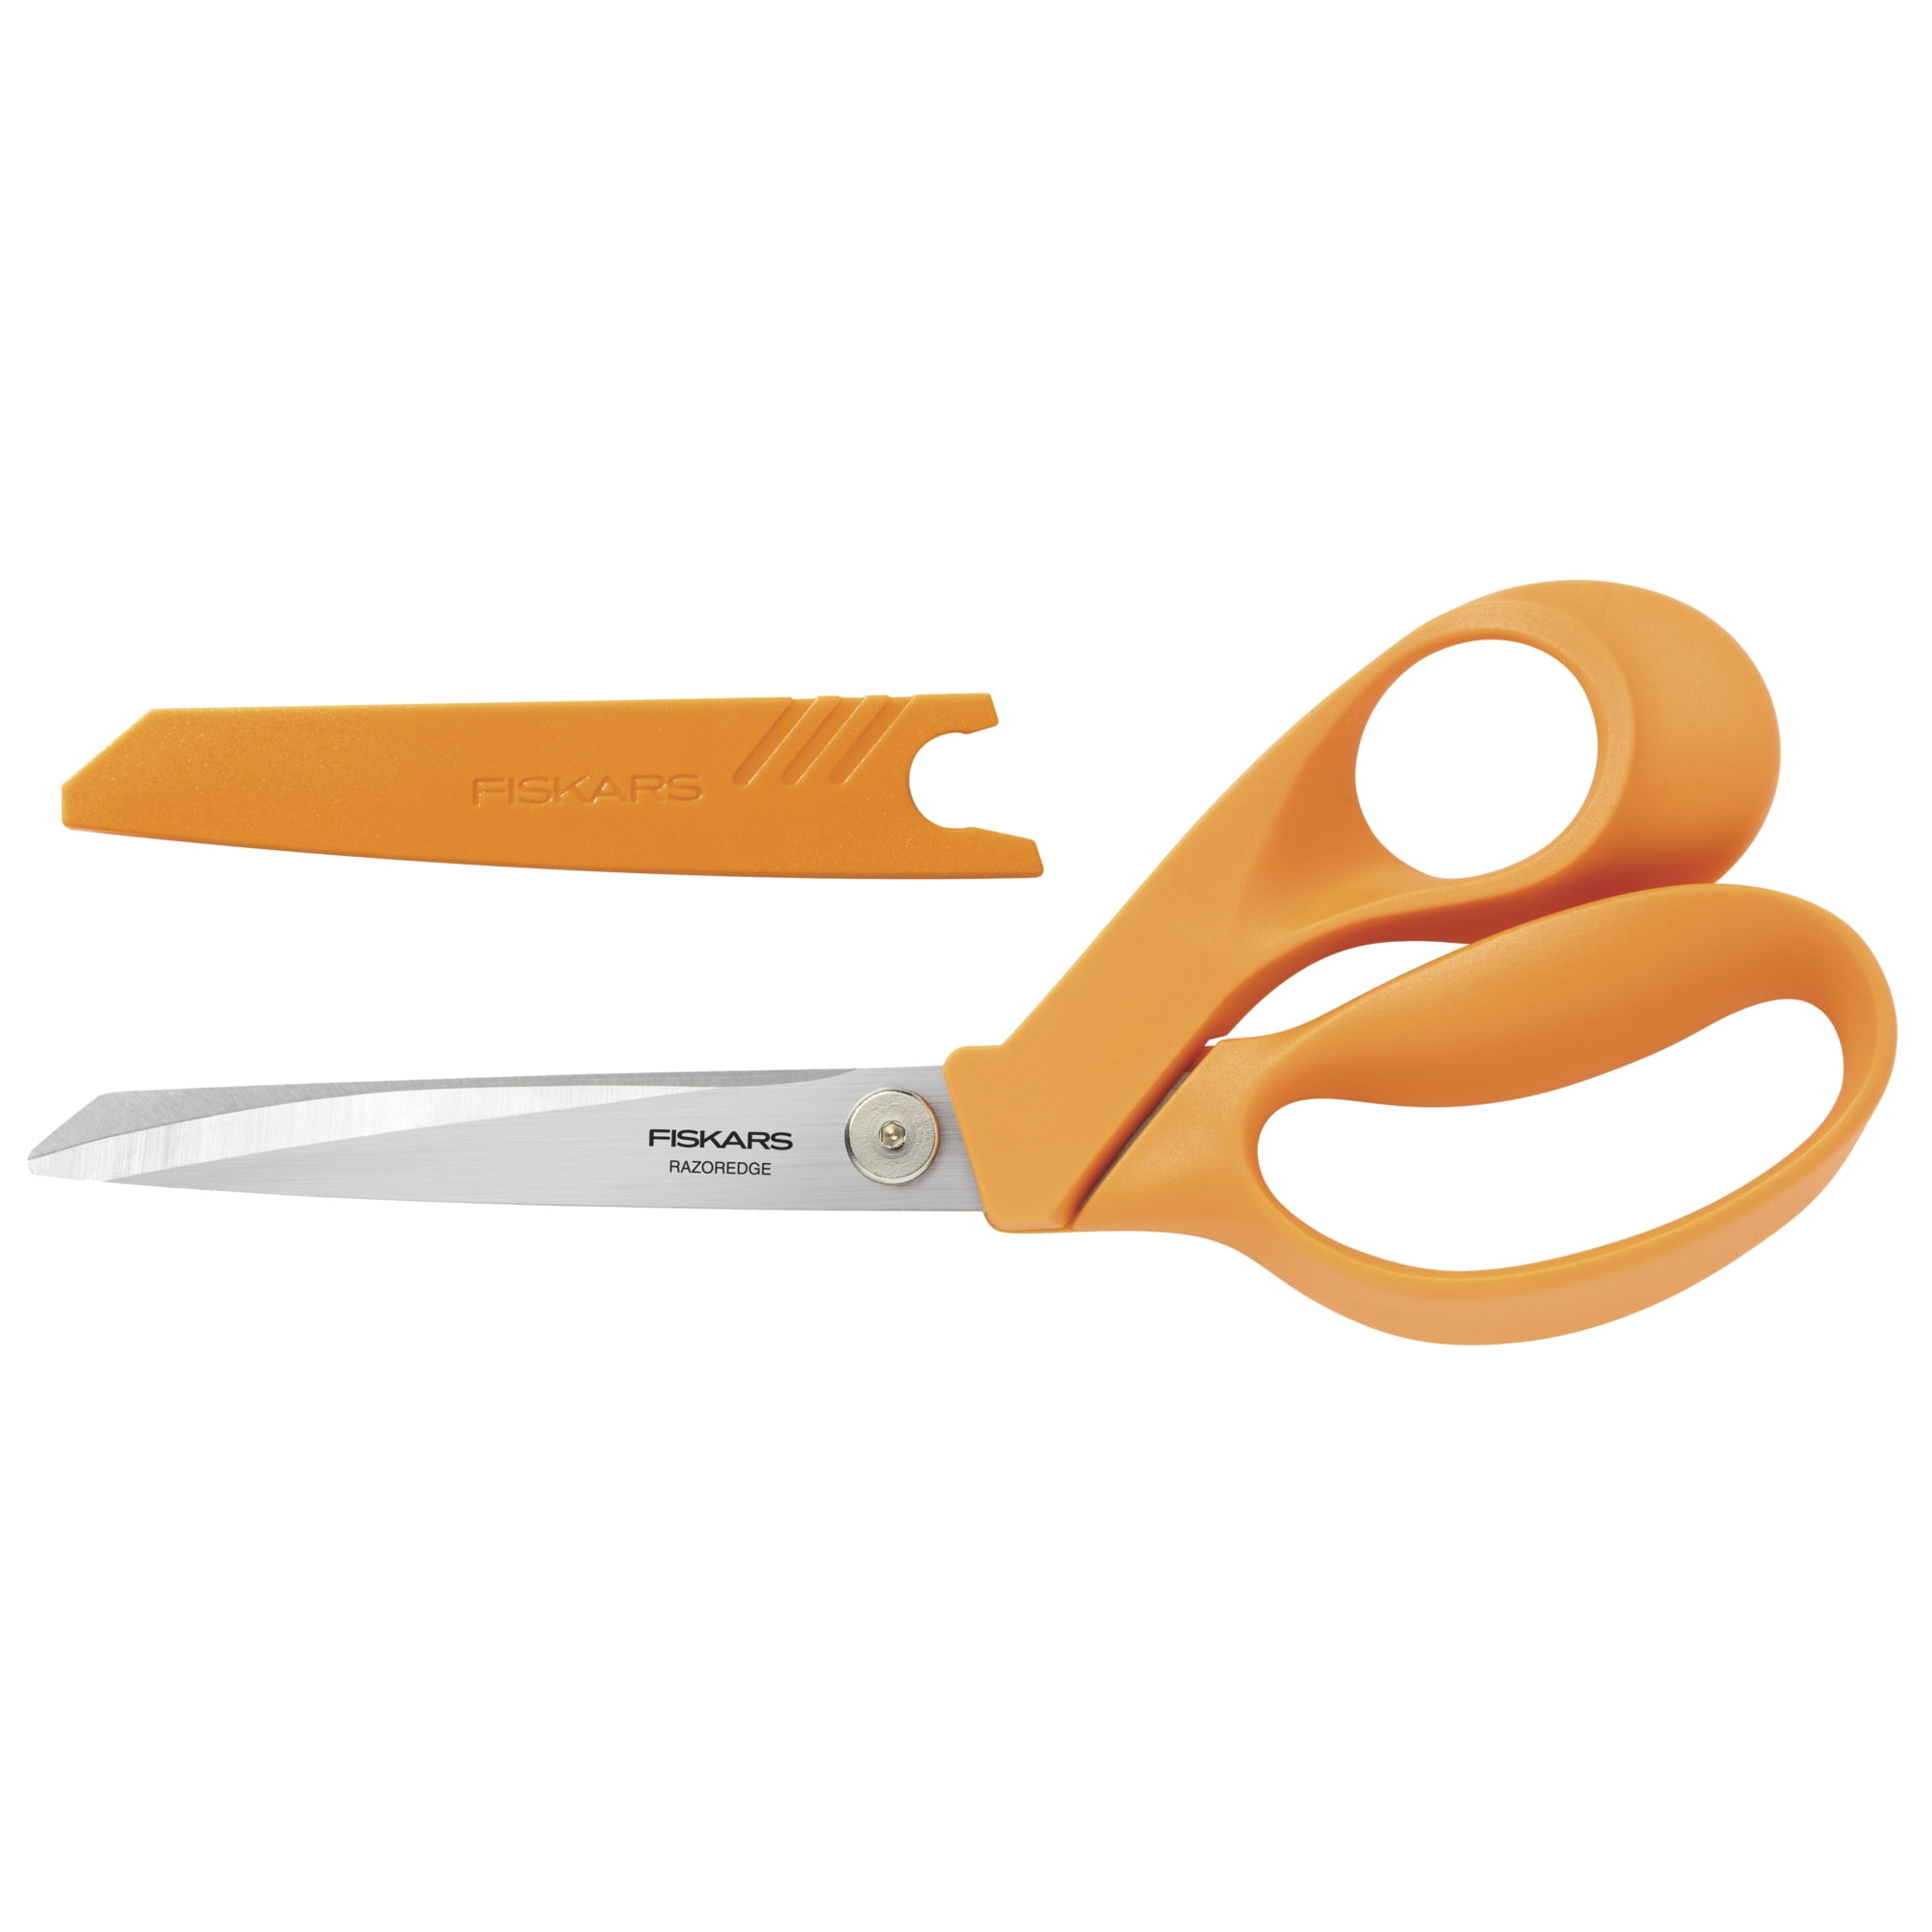 Fiskars SoftGrip Kids Scissors, 5, Blunt, School Supplies for